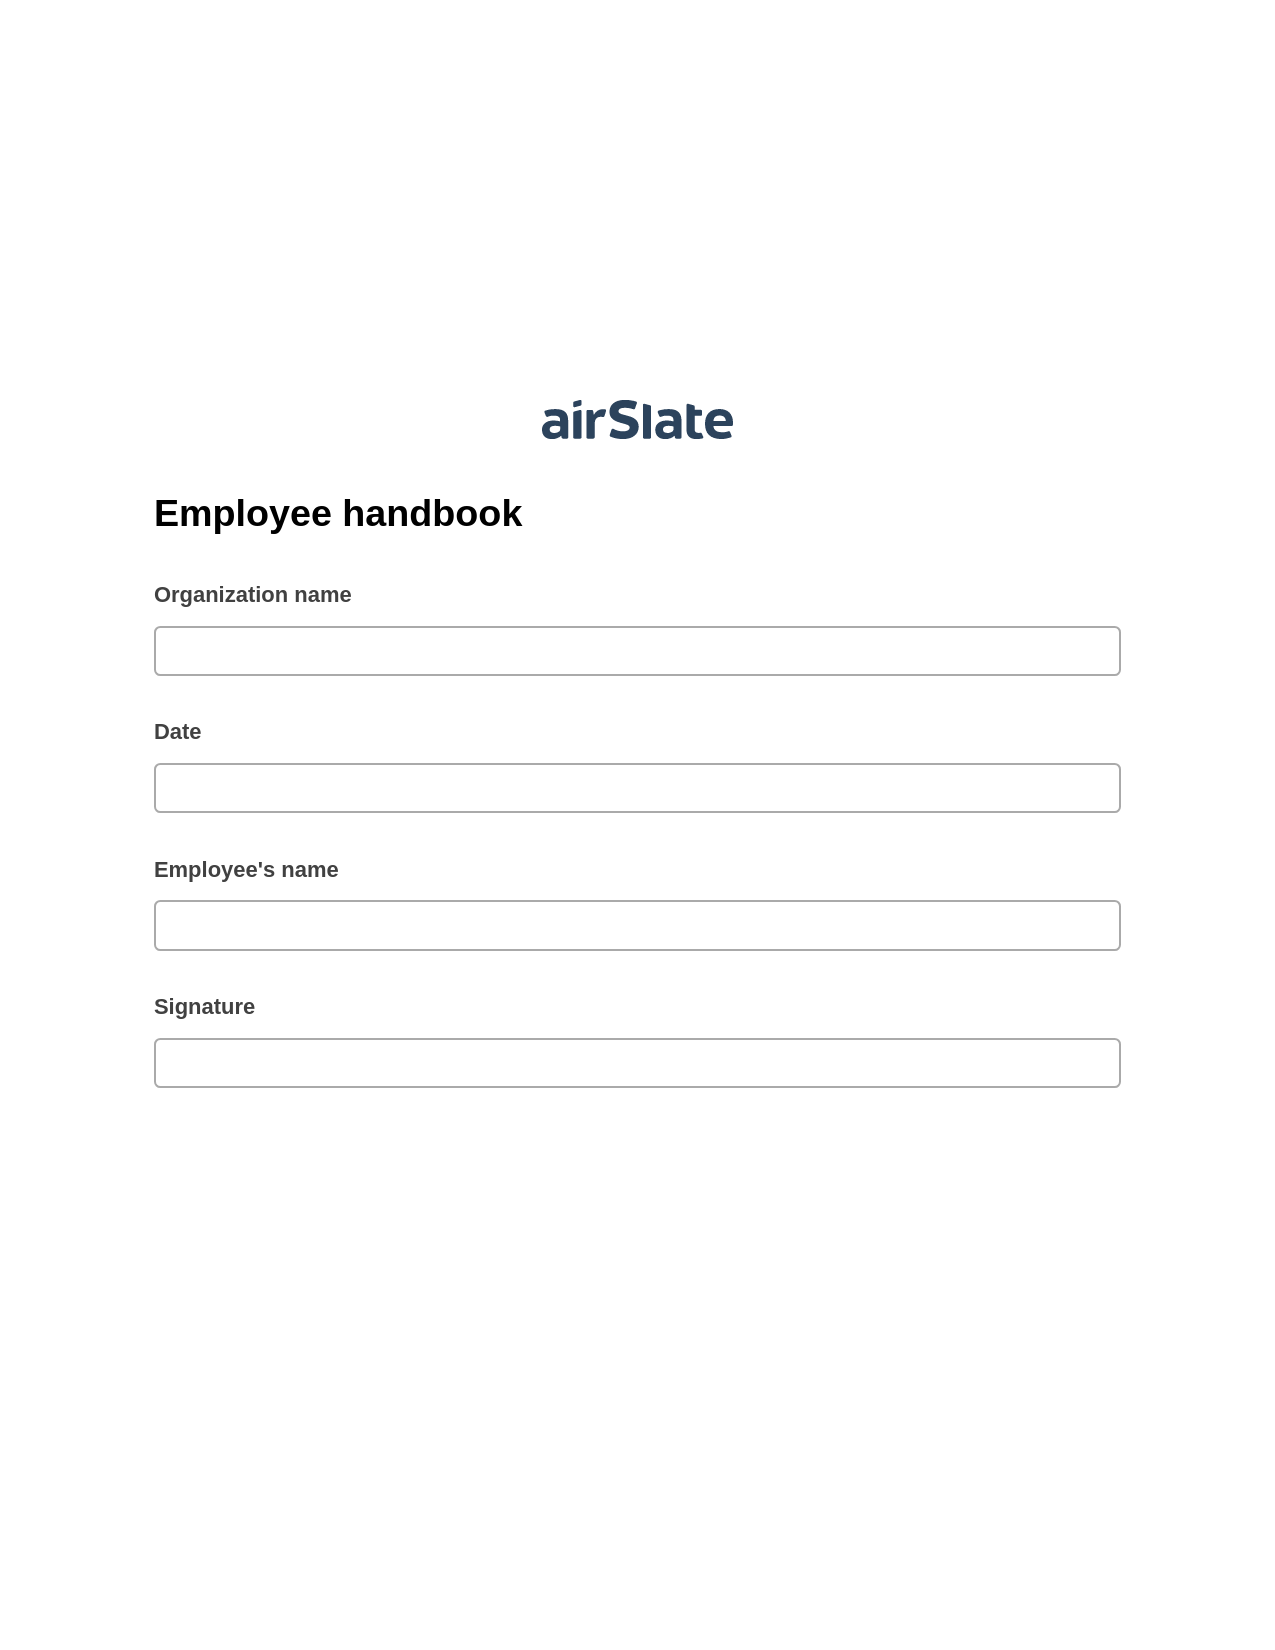 Multirole Employee handbook Pre-fill Dropdown from Airtable, Email Notification Bot, Slack Notification Postfinish Bot